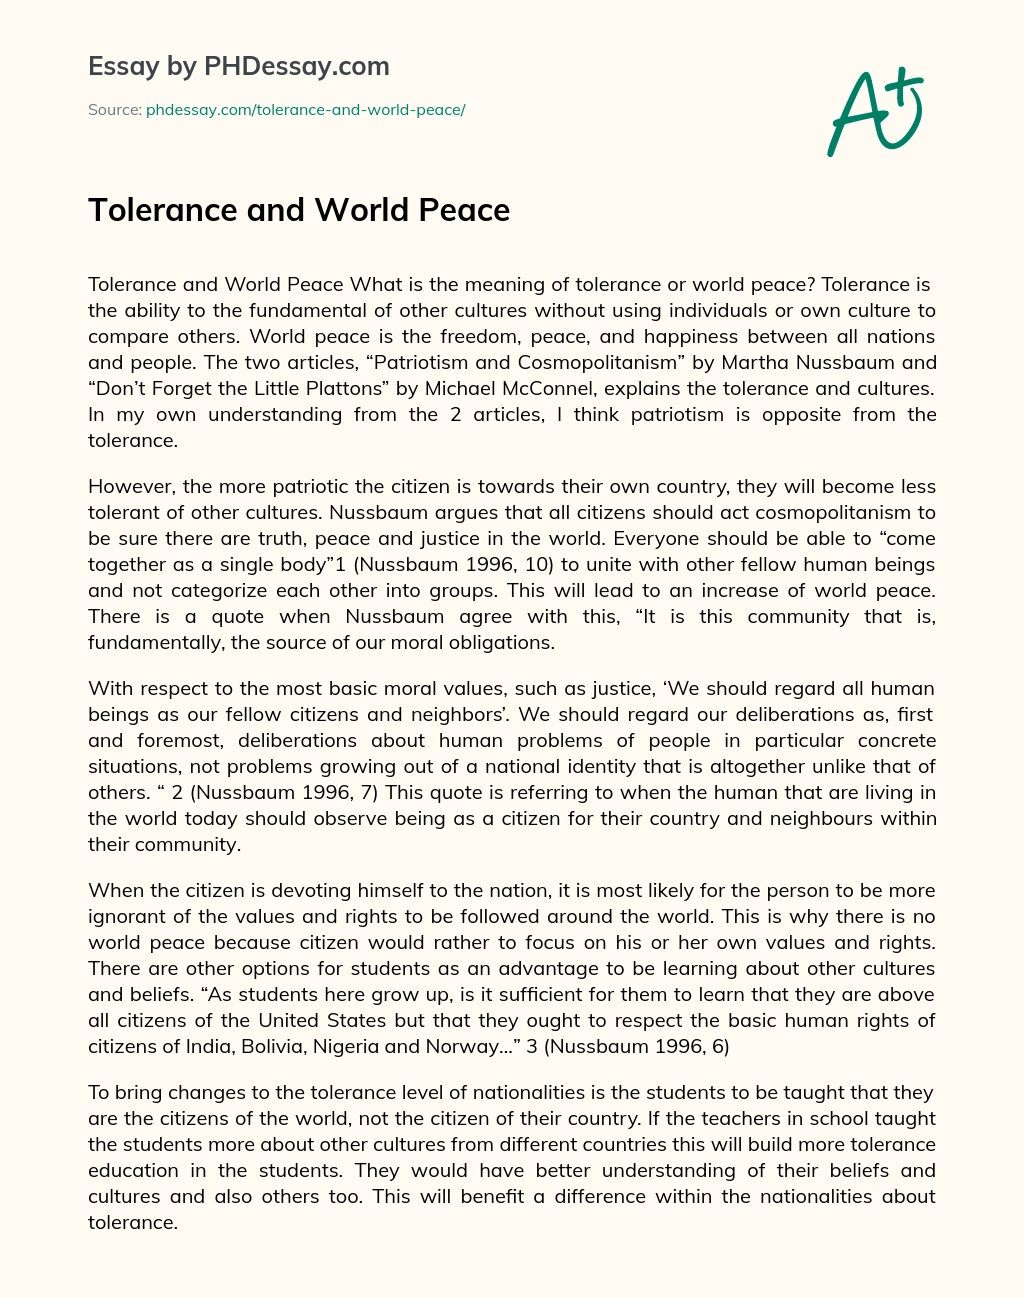 Tolerance and World Peace essay